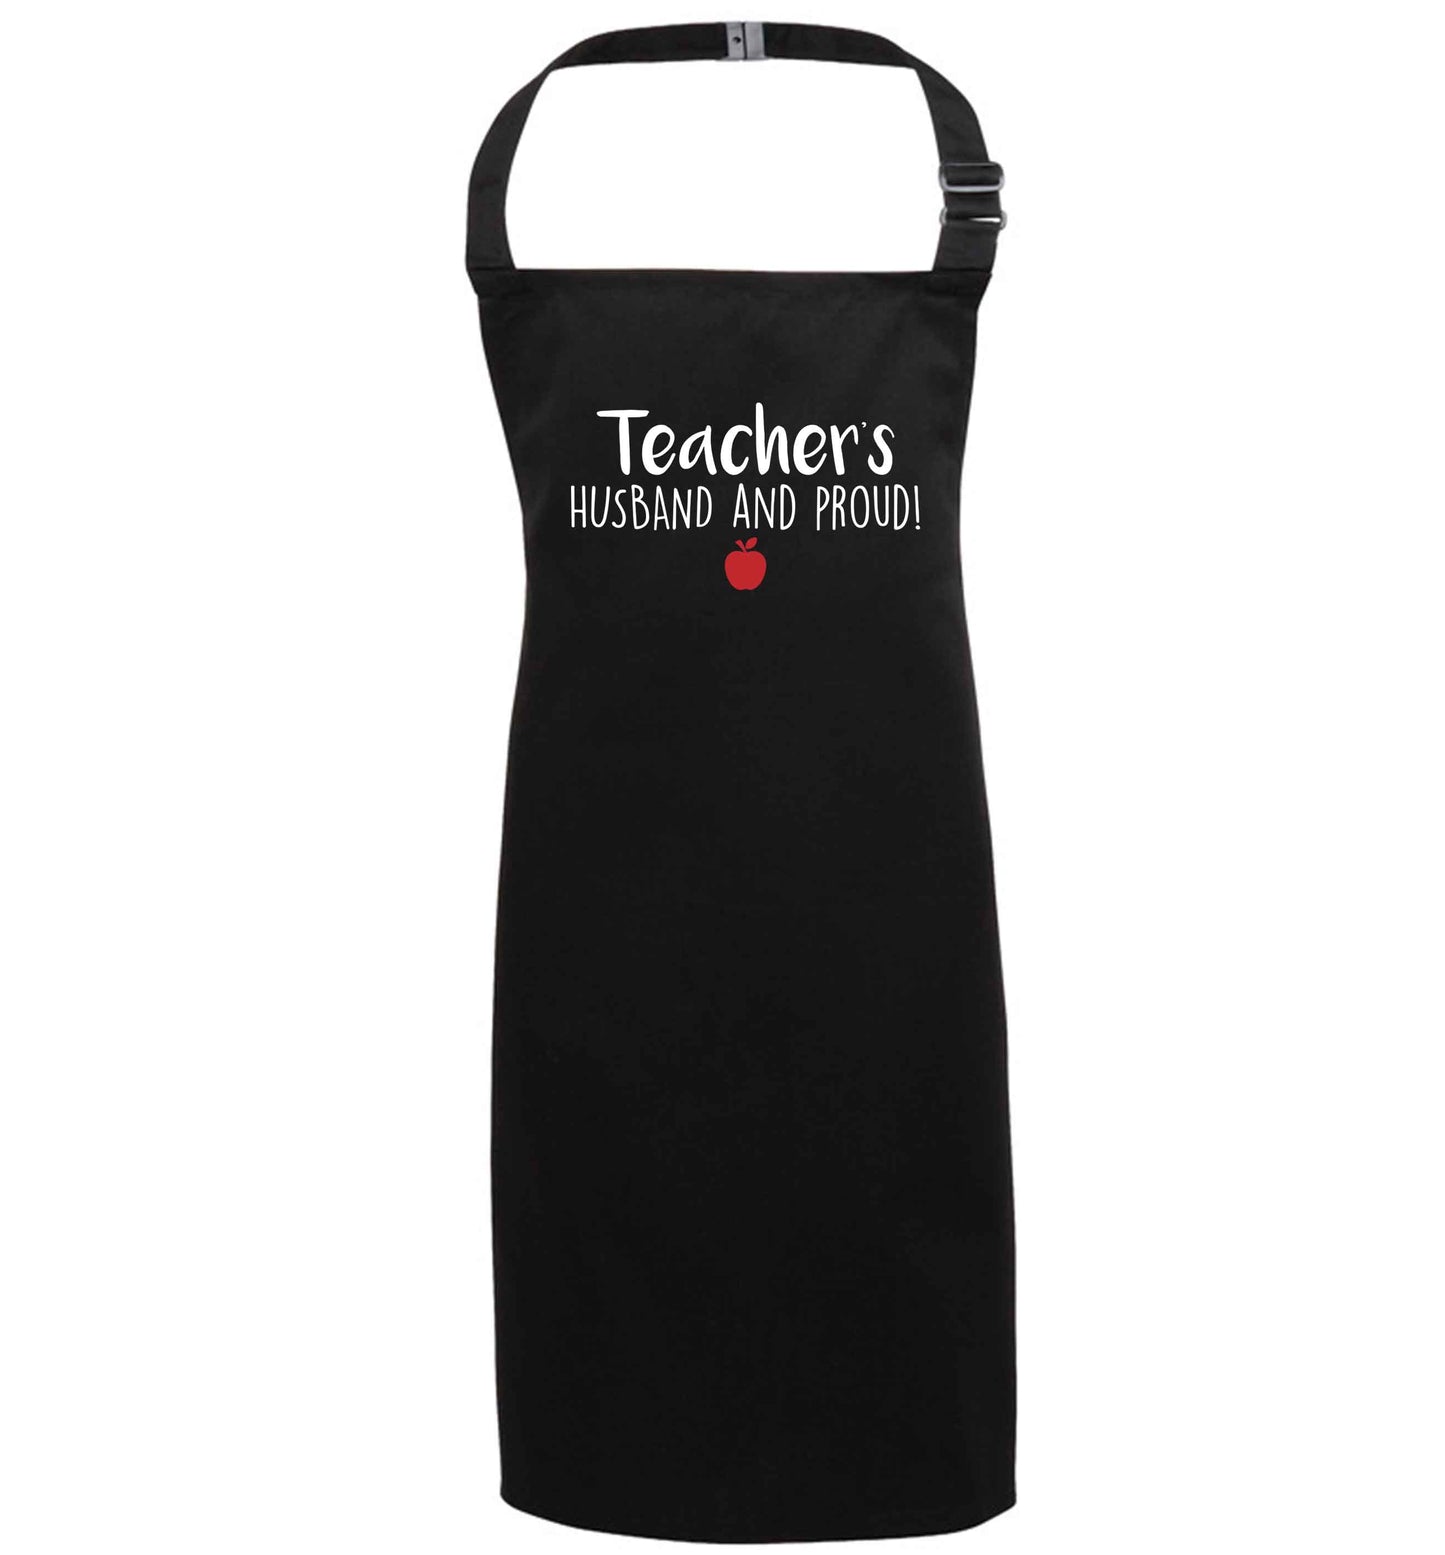 Teachers husband and proud black apron 7-10 years